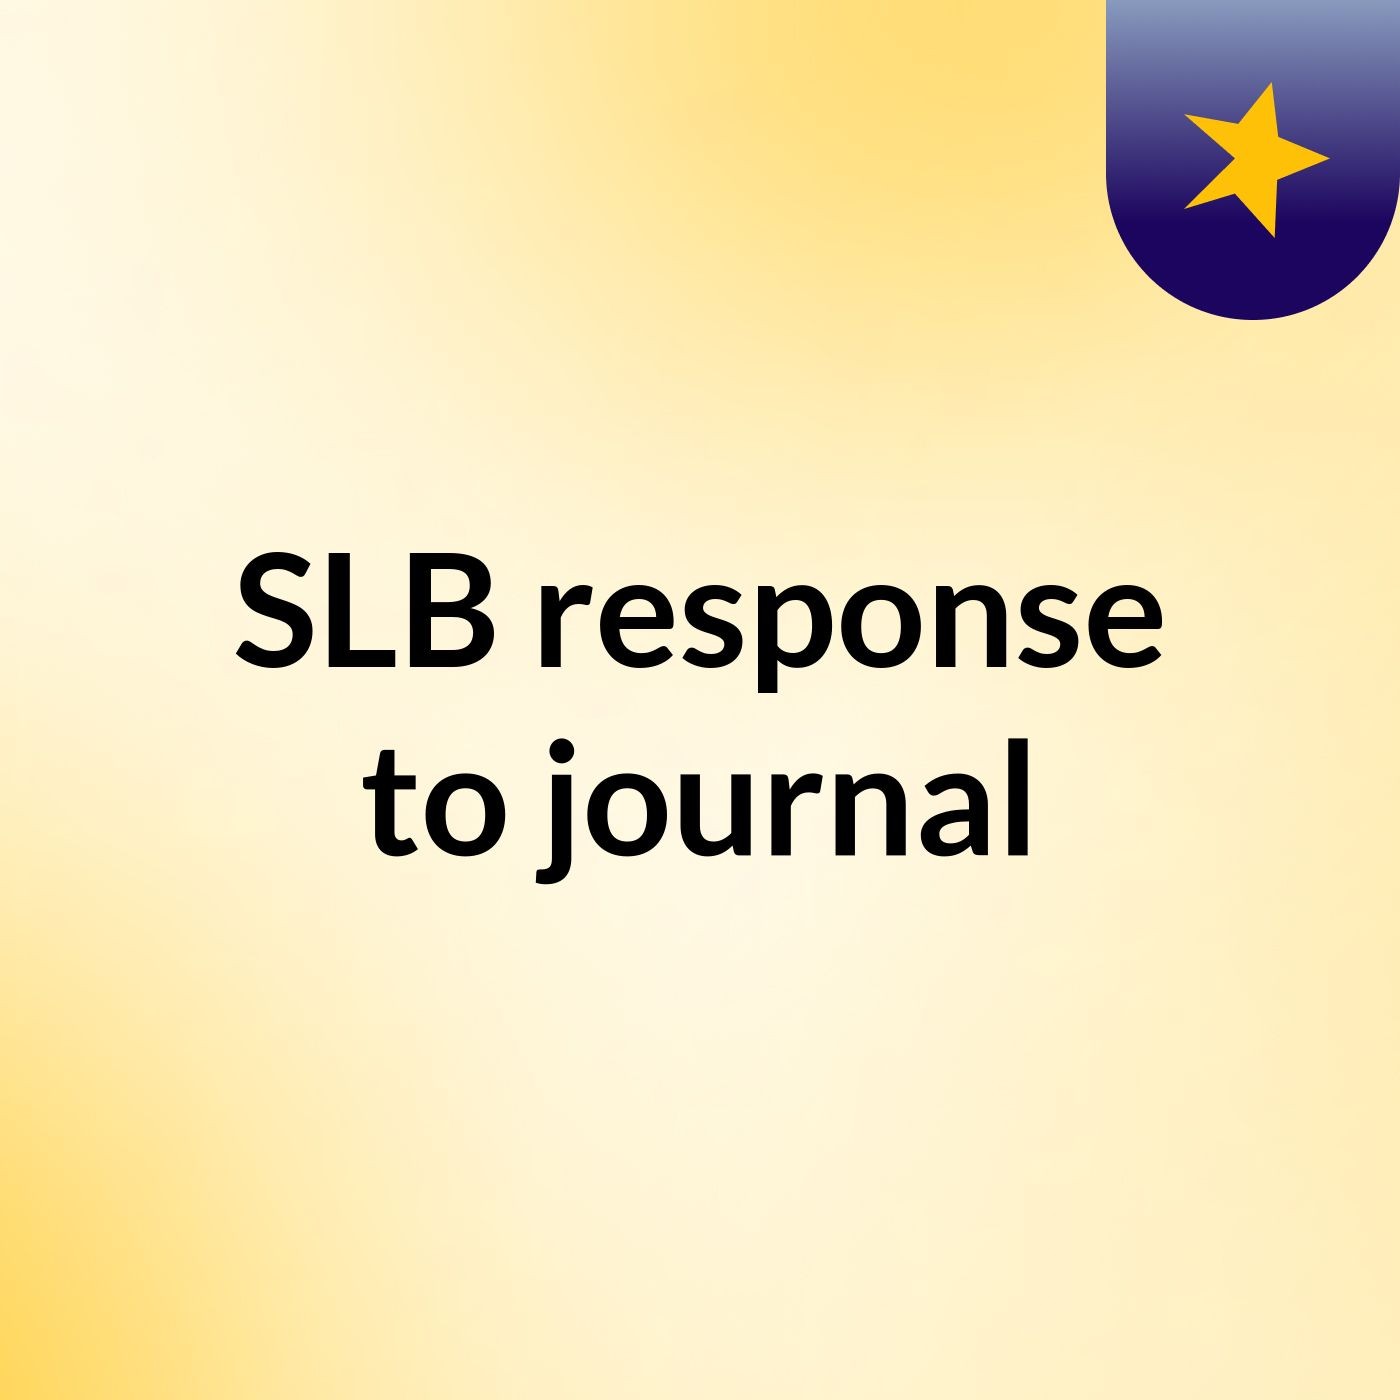 SLB response to journal